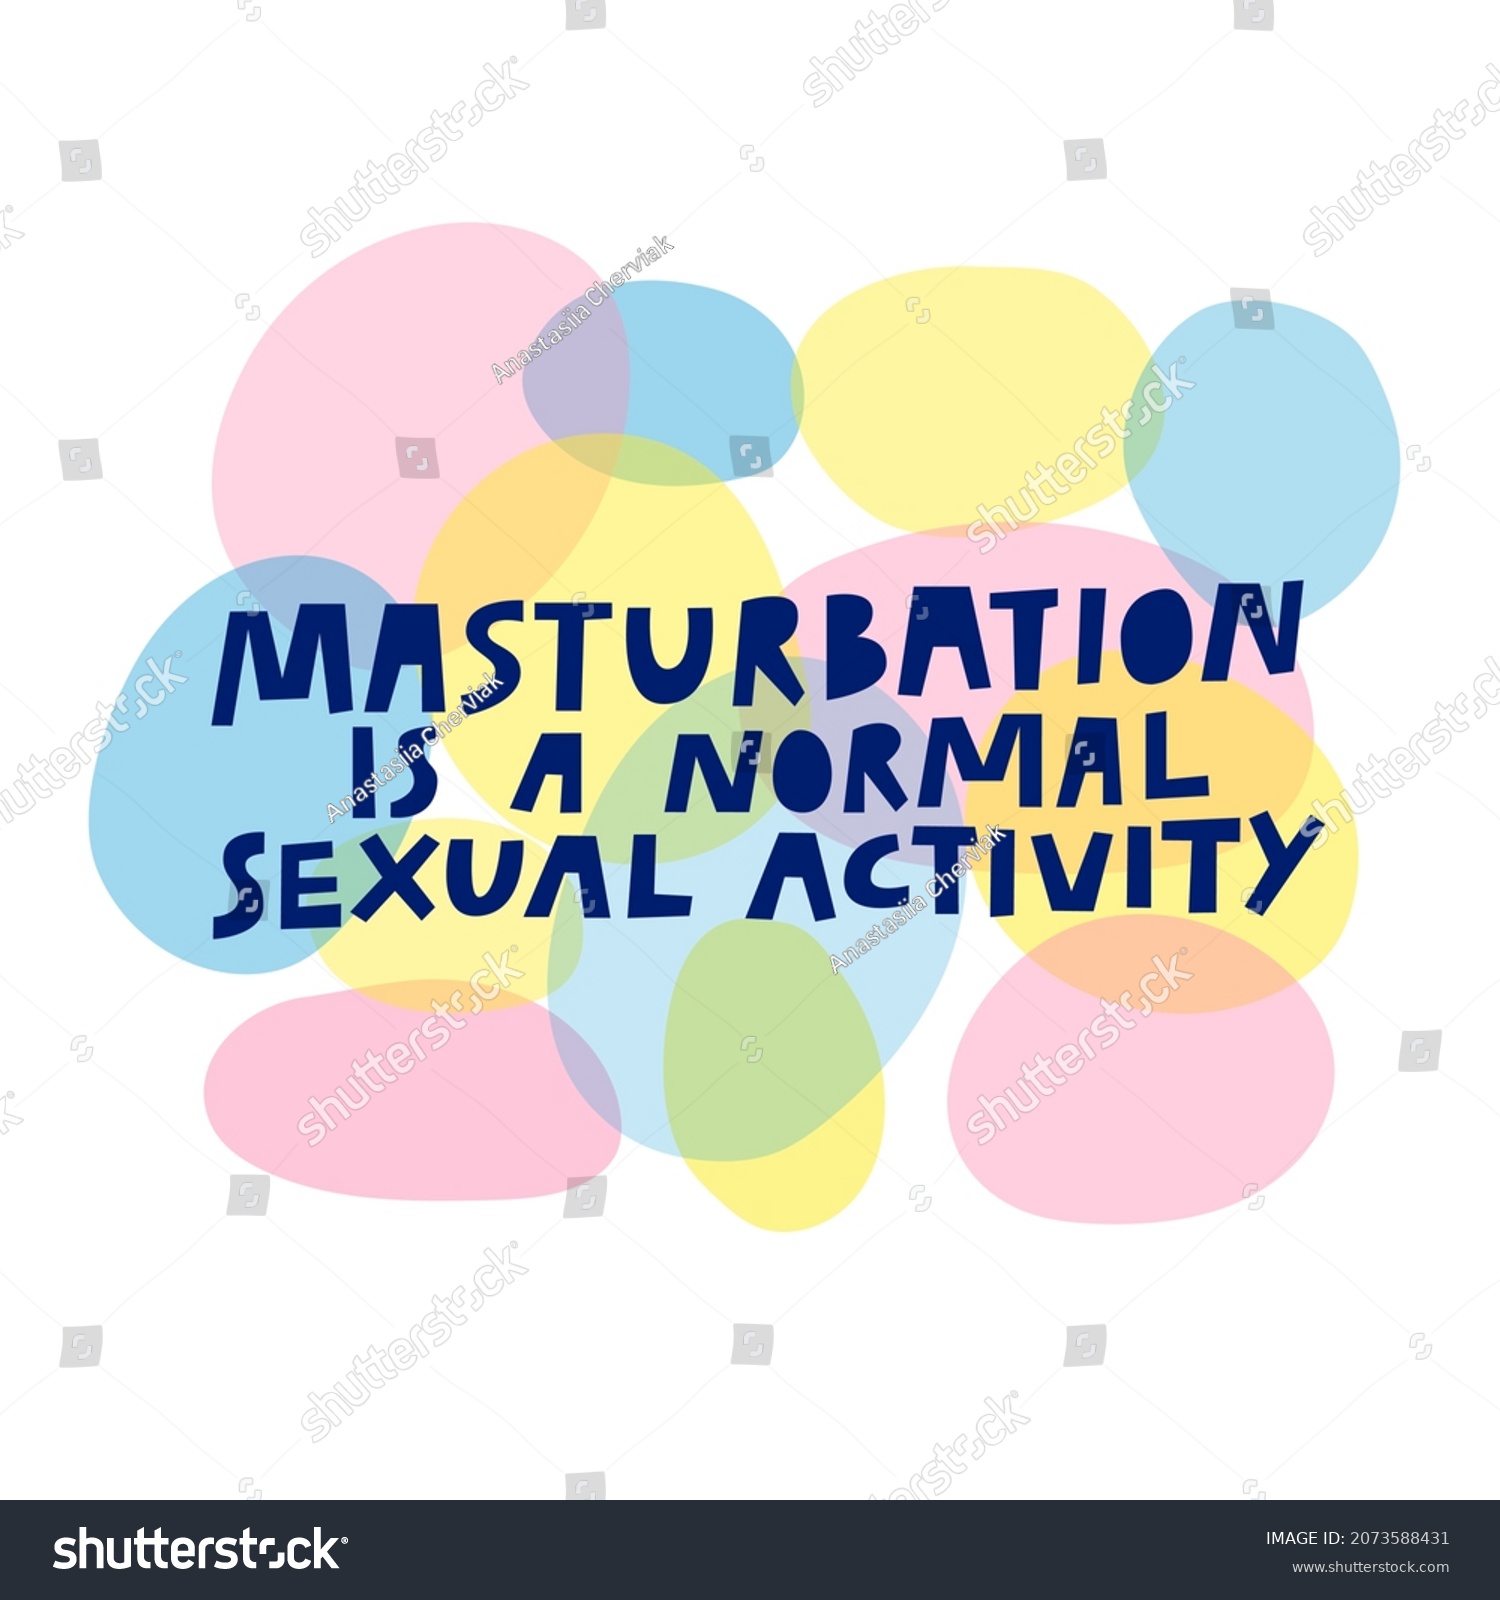 Masturbation Normal Sexual Activity Hand Drawn Vetor Stock Livre De Direitos 2073588431